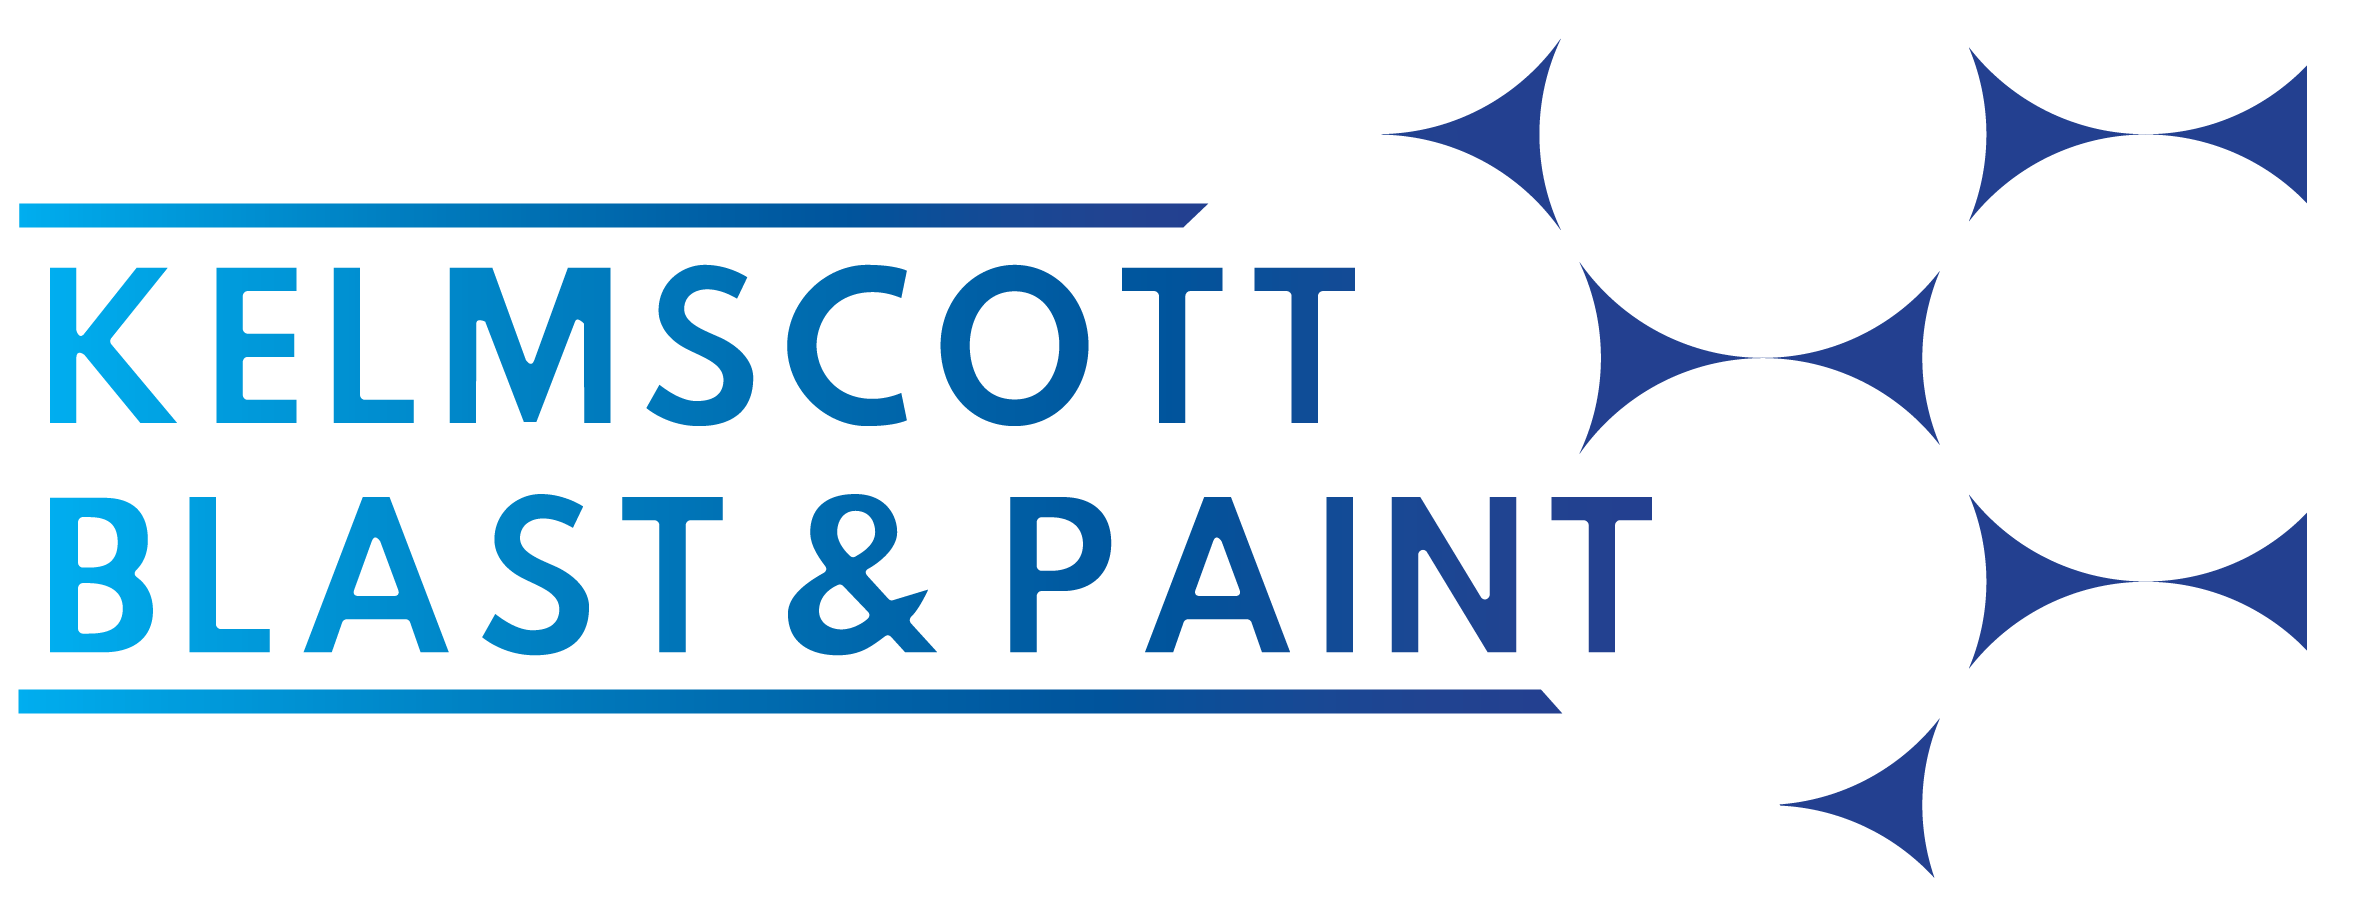 Kelmscott Blast & Paint logo.